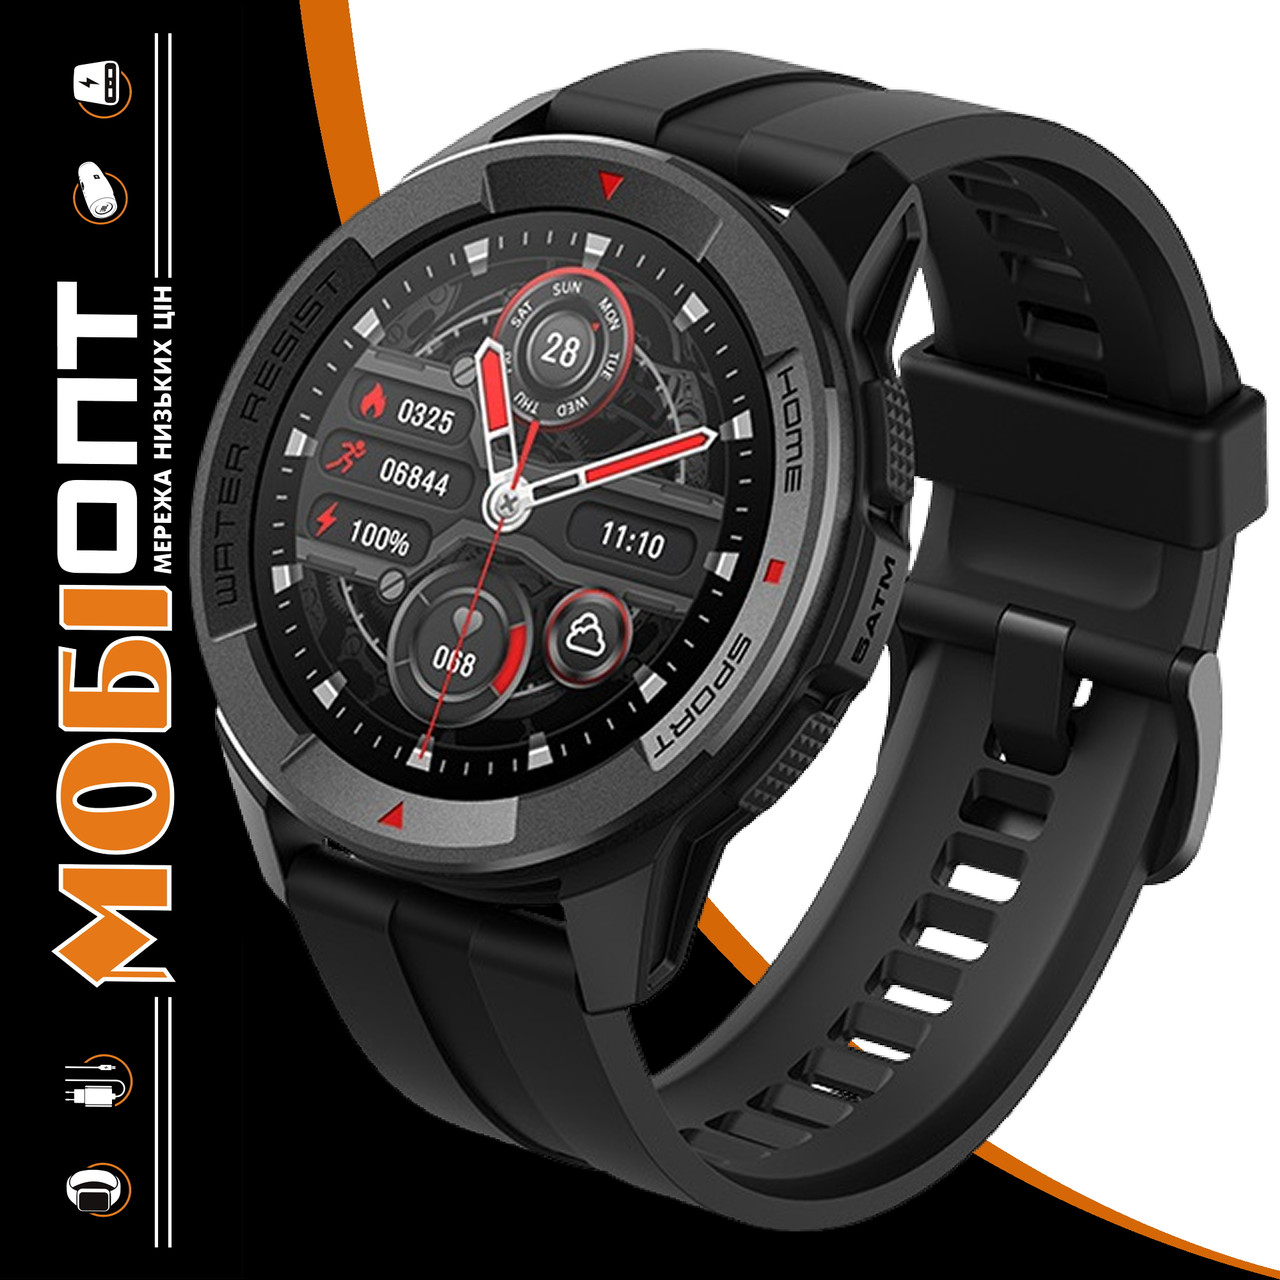 Smart Watch Xiaomi Mibro X1 (XPAW005) black